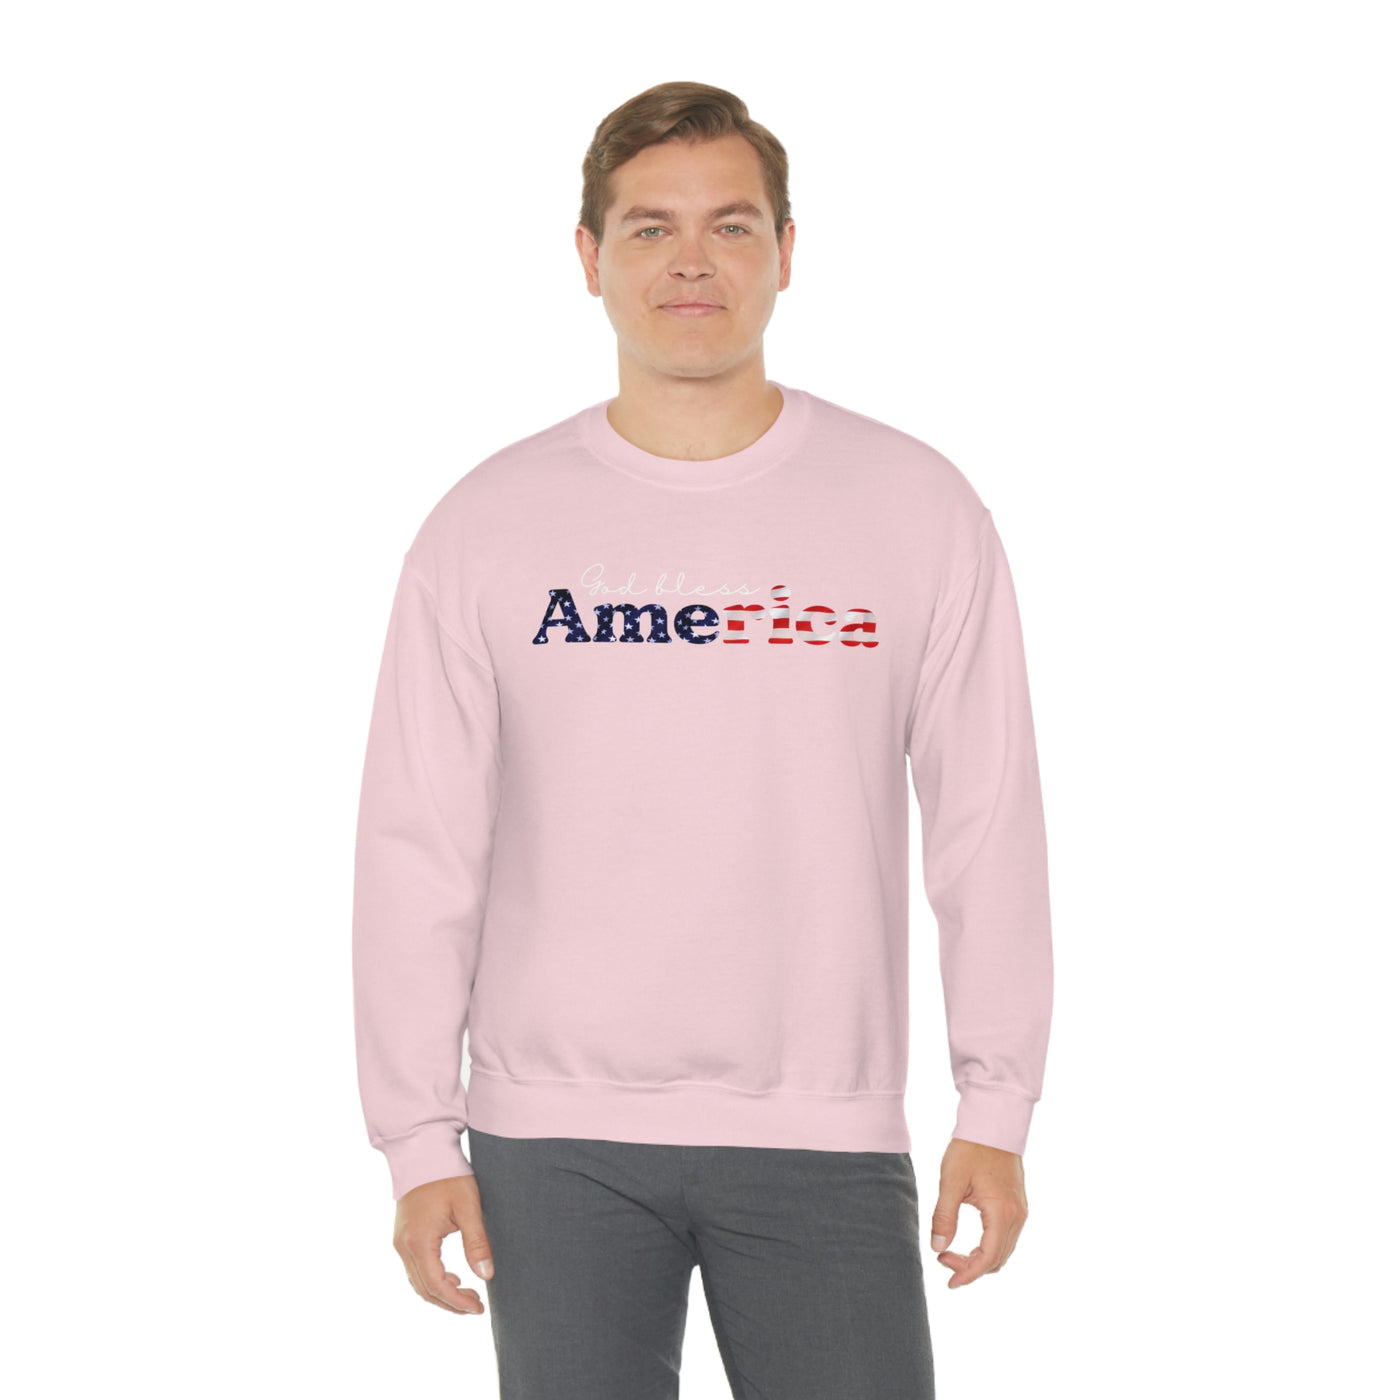 God Bless America Crewneck Sweatshirt